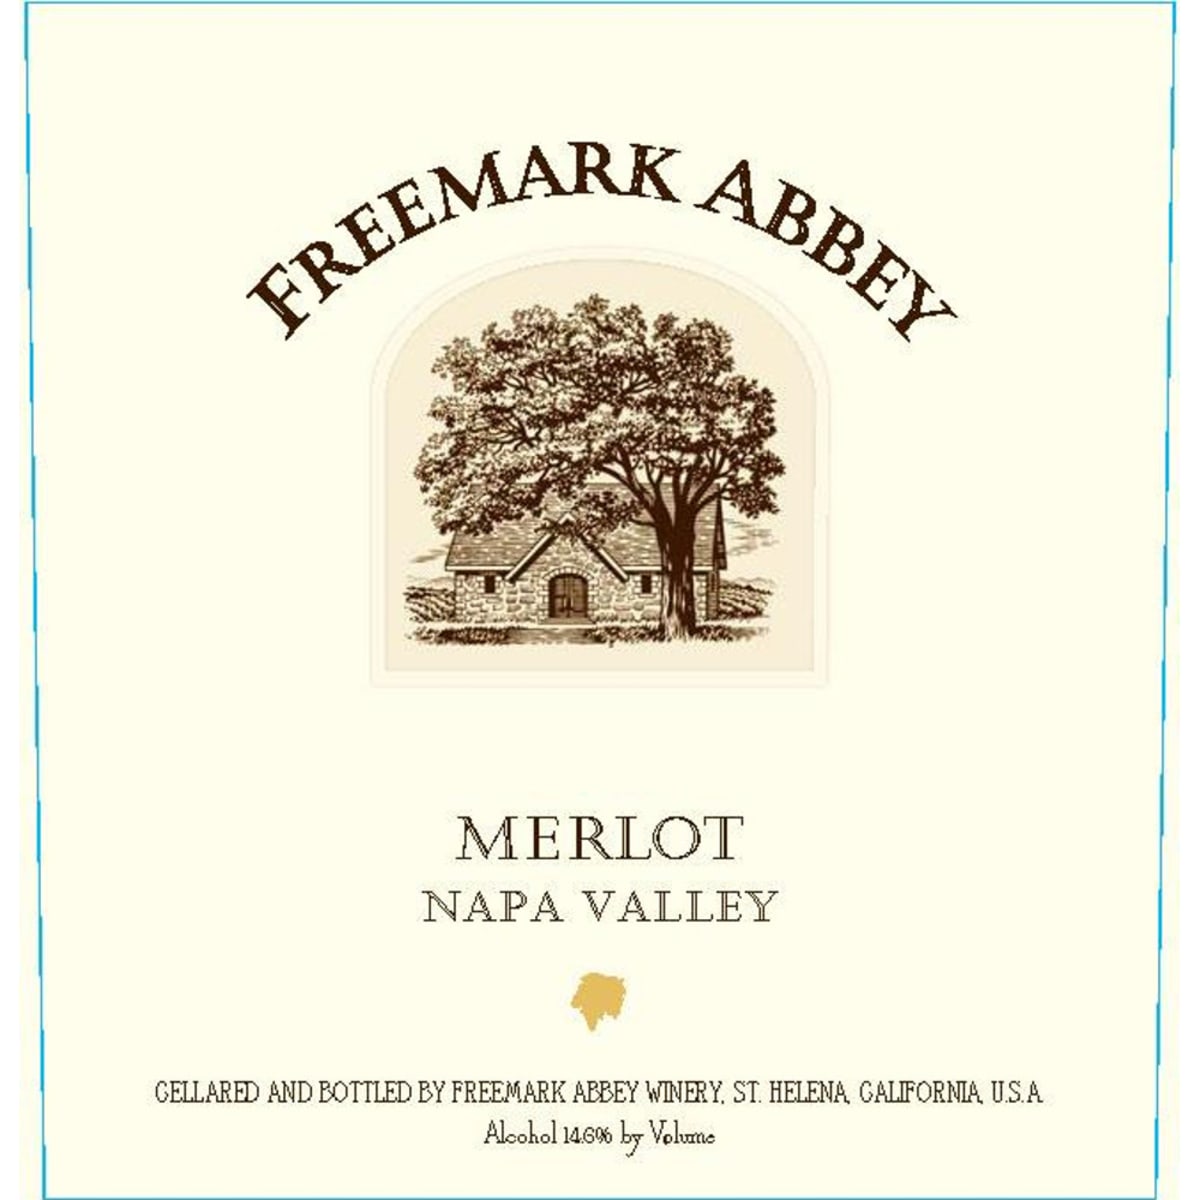 Freemark Abbey Napa Valley Merlot 2007 Front Label